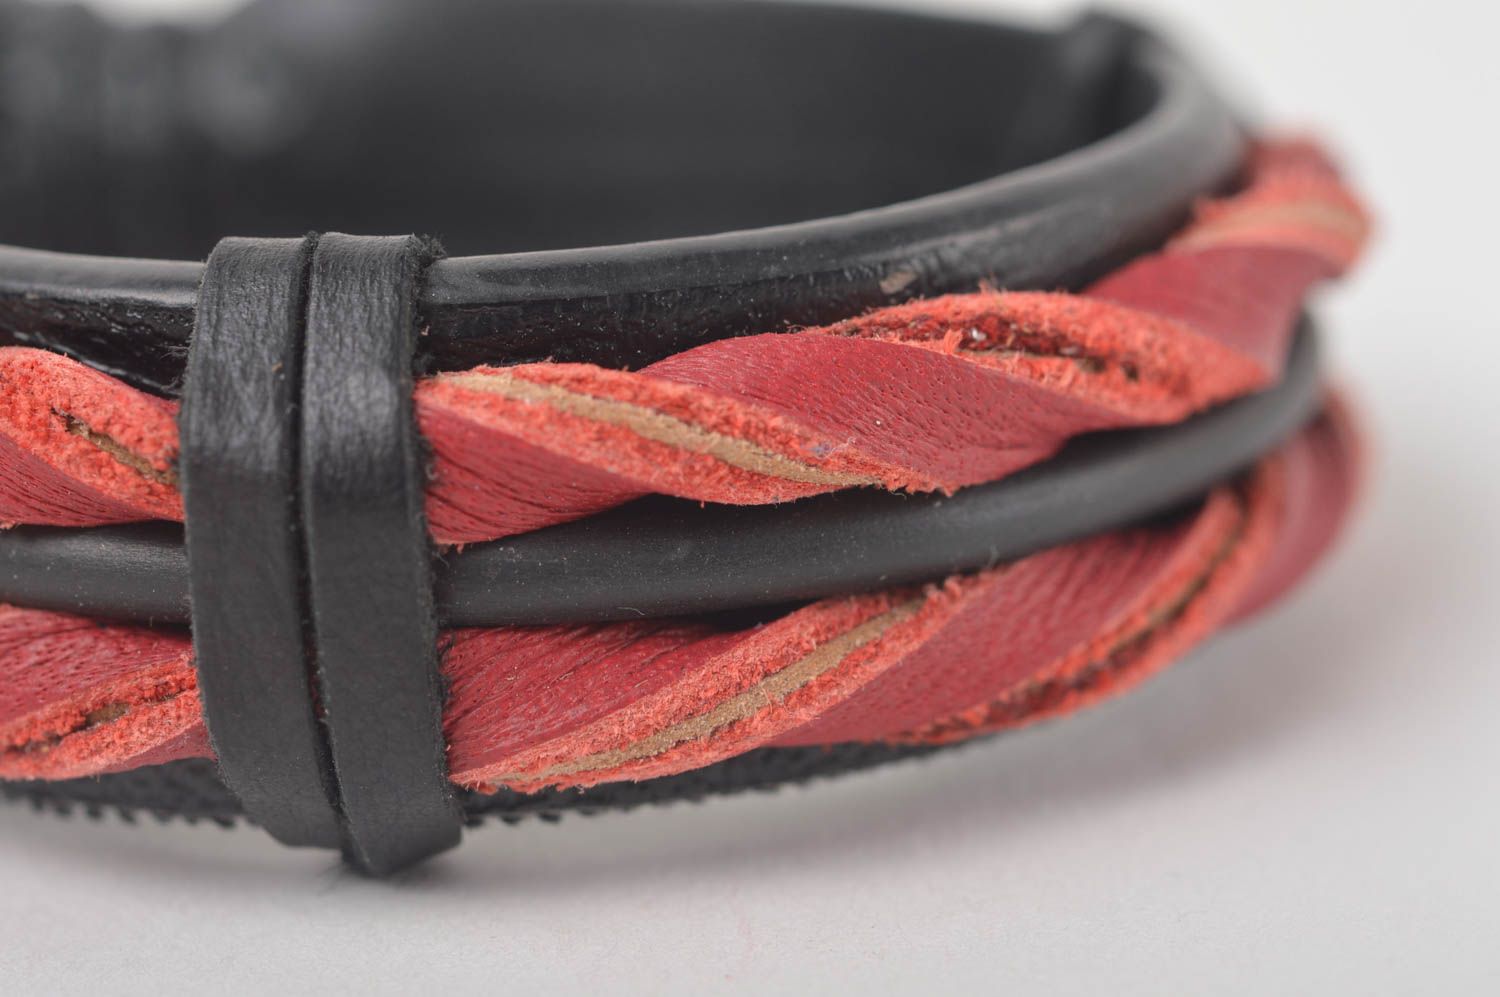 Unusual handmade leather wrist bracelet stylish bracelet designs gifts for her photo 4